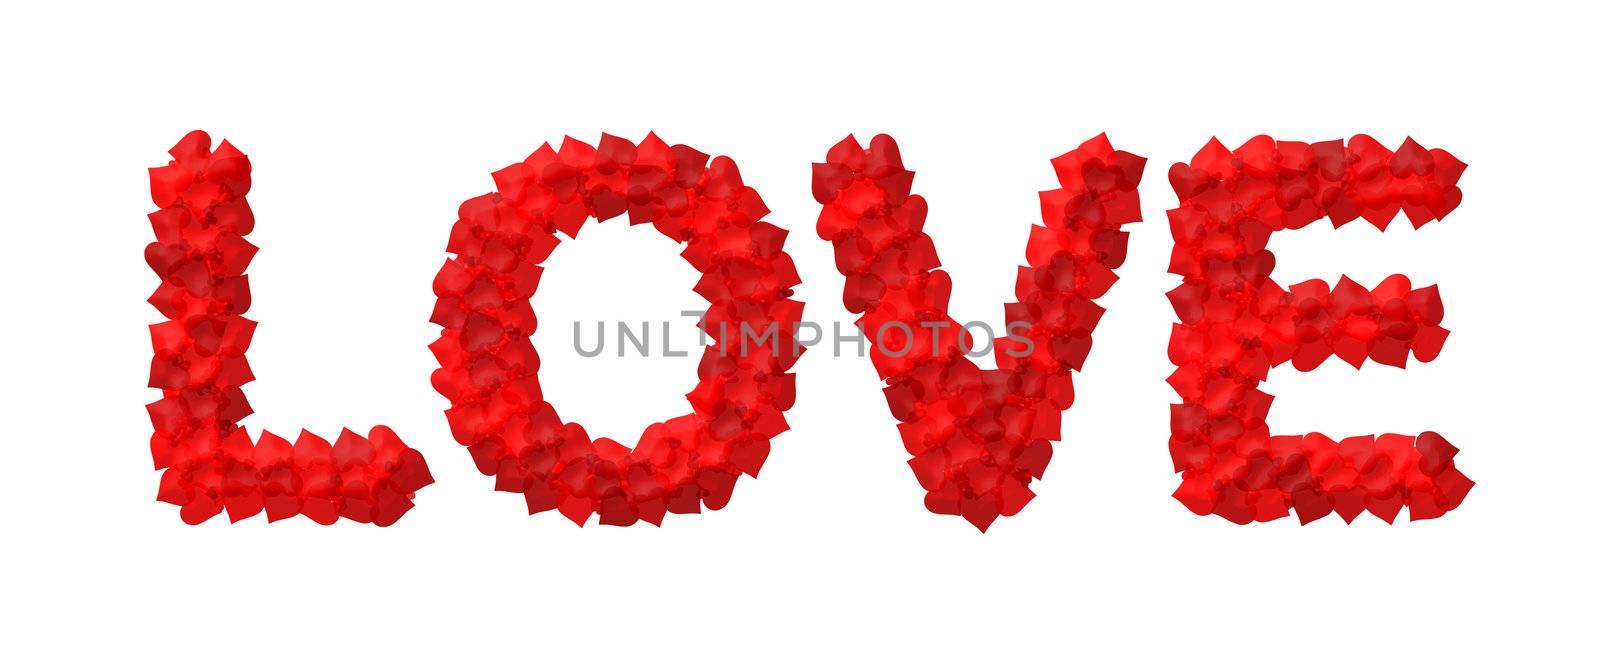 Love text made of heart shape by geargodz